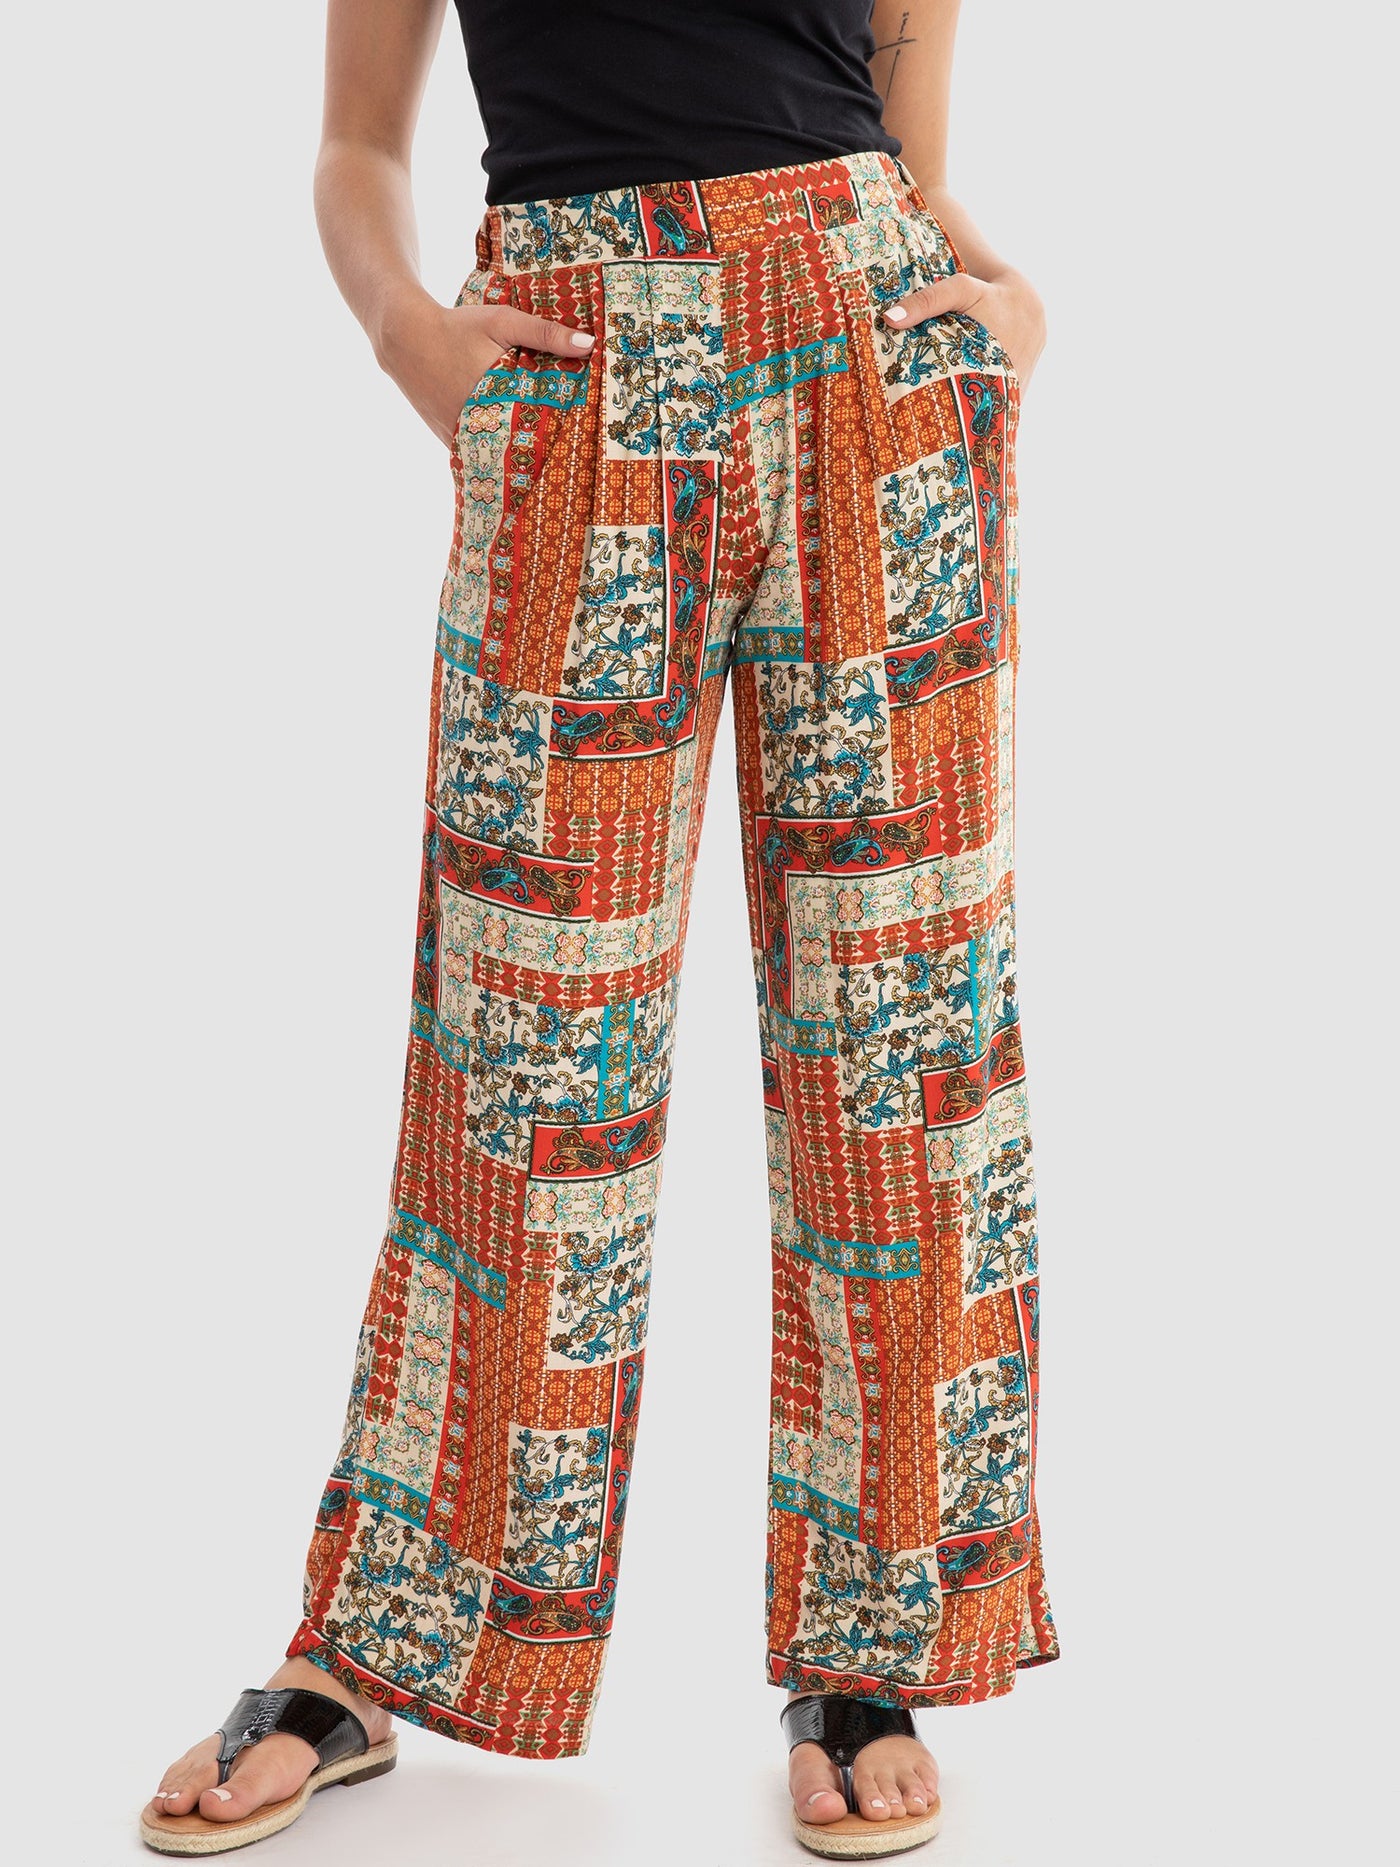 Premoda Womens All-Over Printed Wide Legs Pants